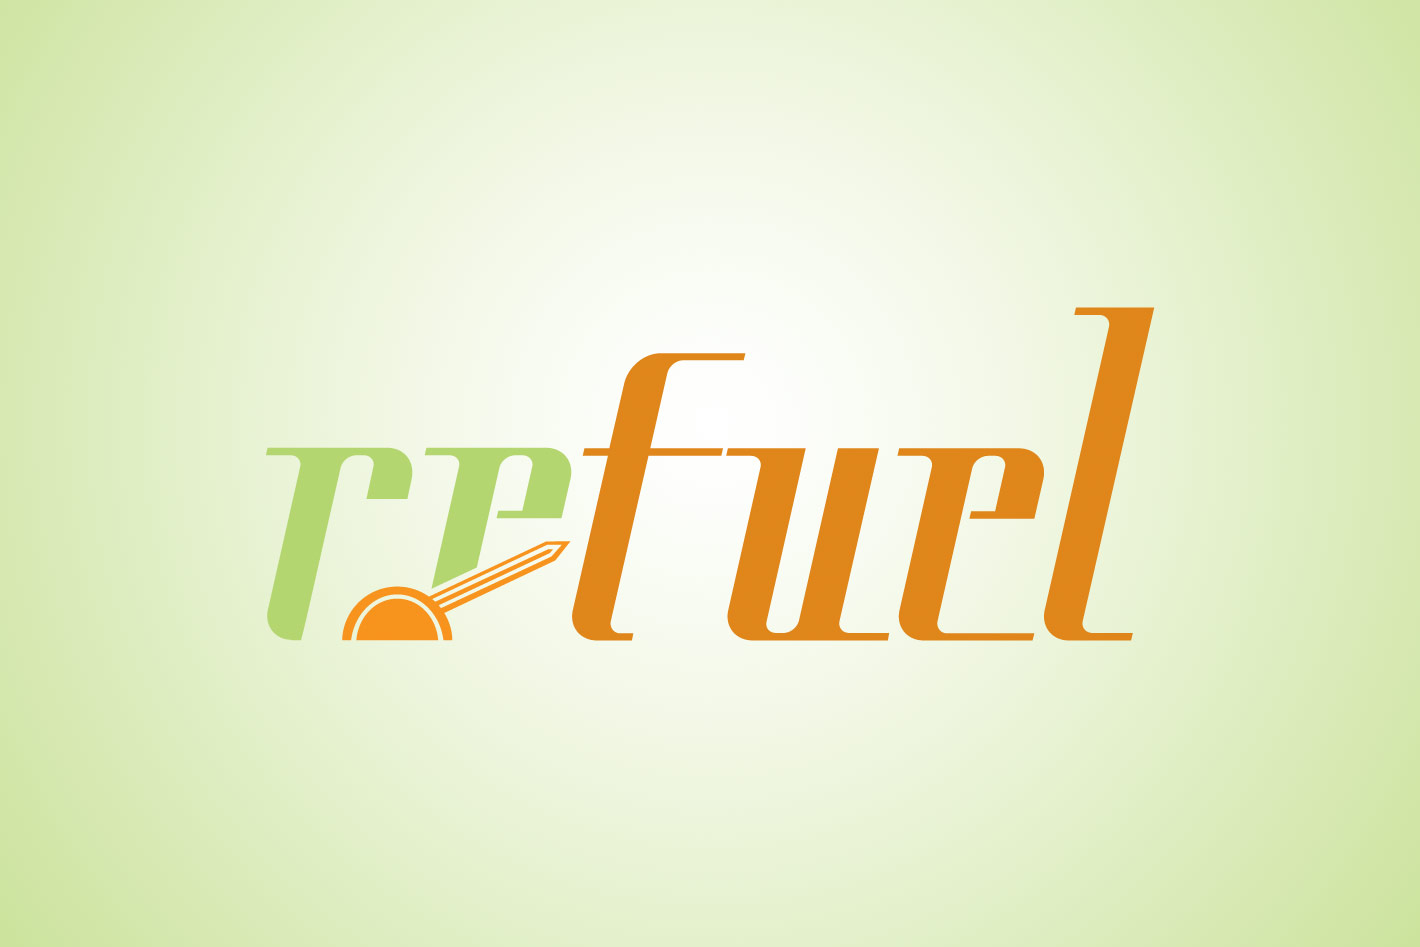 Refuel logo option 2